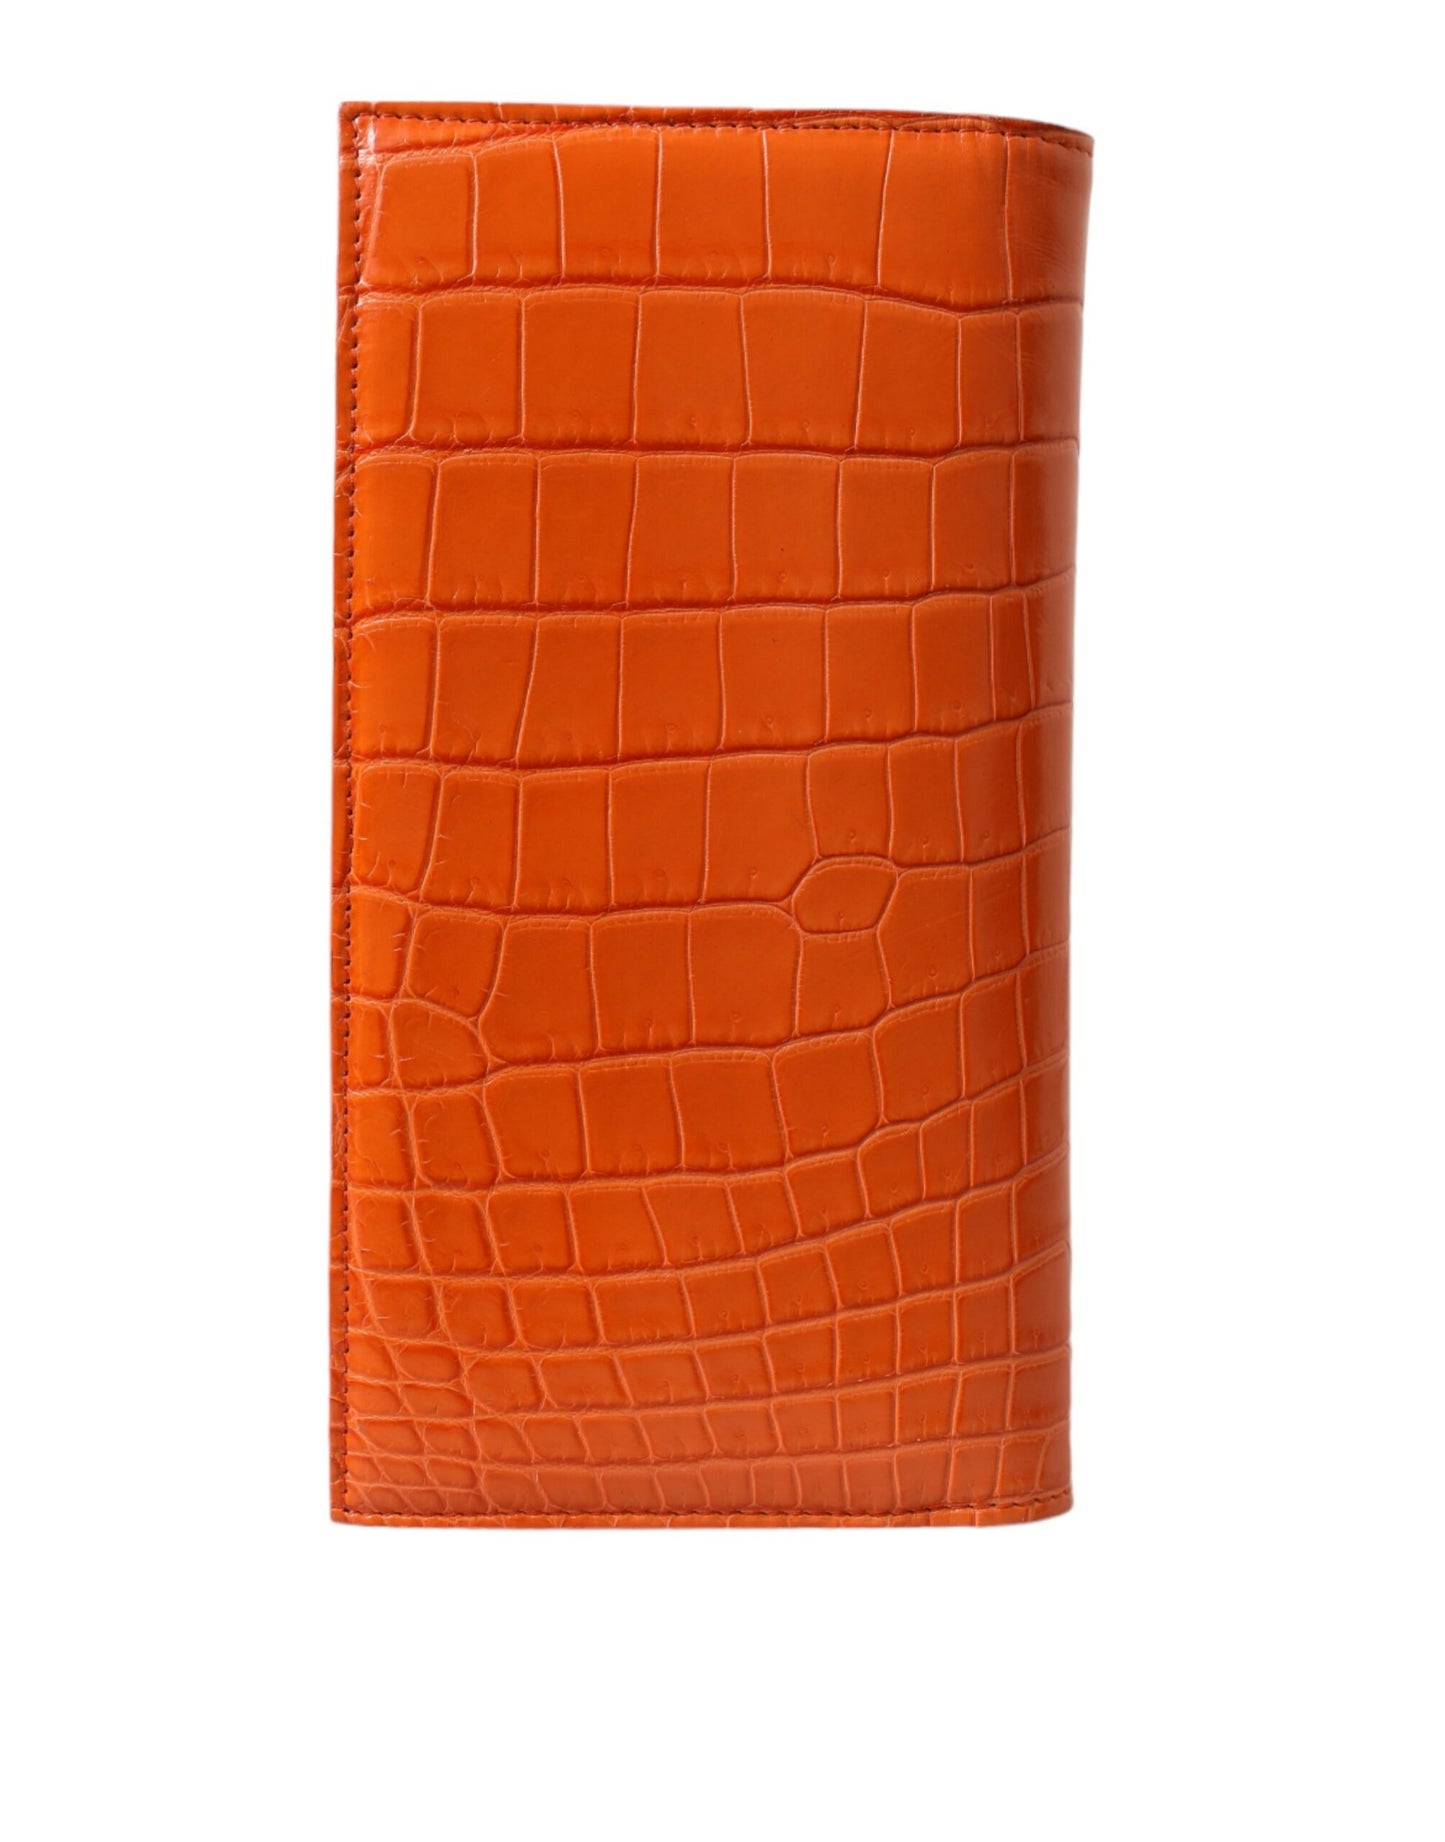 Chic Orange Crocodile Leather Wallet